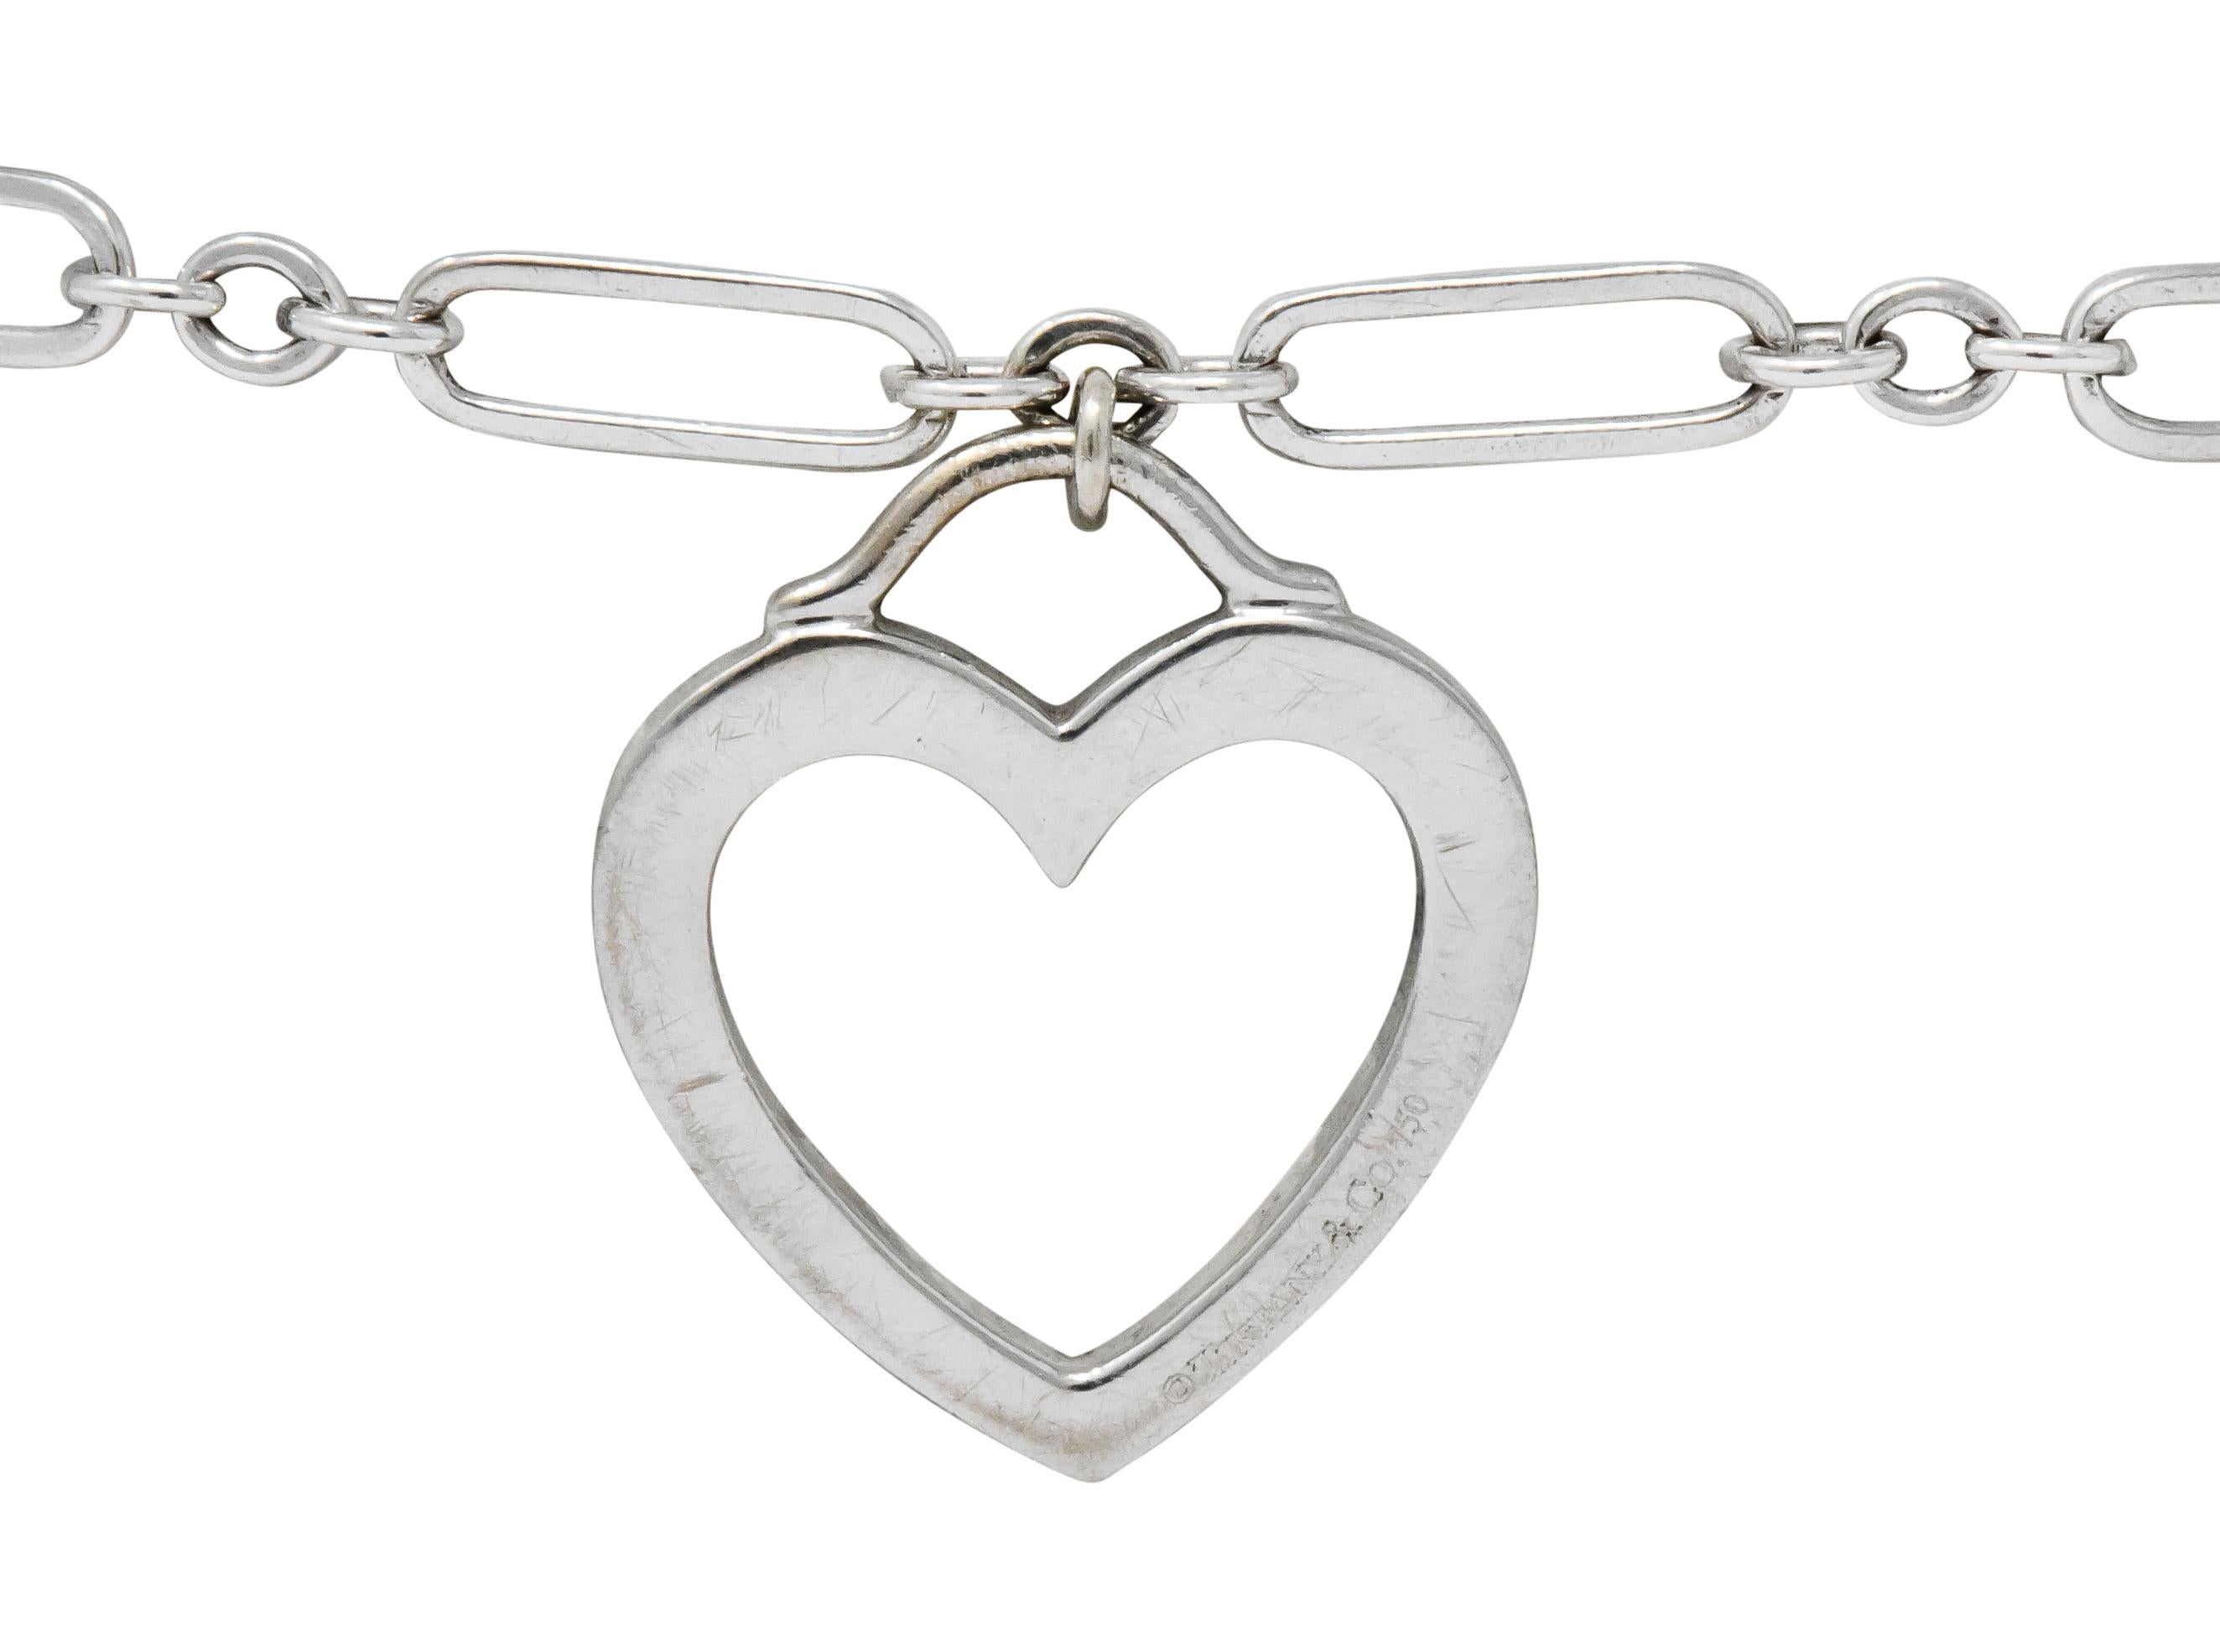 Contemporary Tiffany & Co. 18 Karat White Gold Link Heart Charm Bracelet